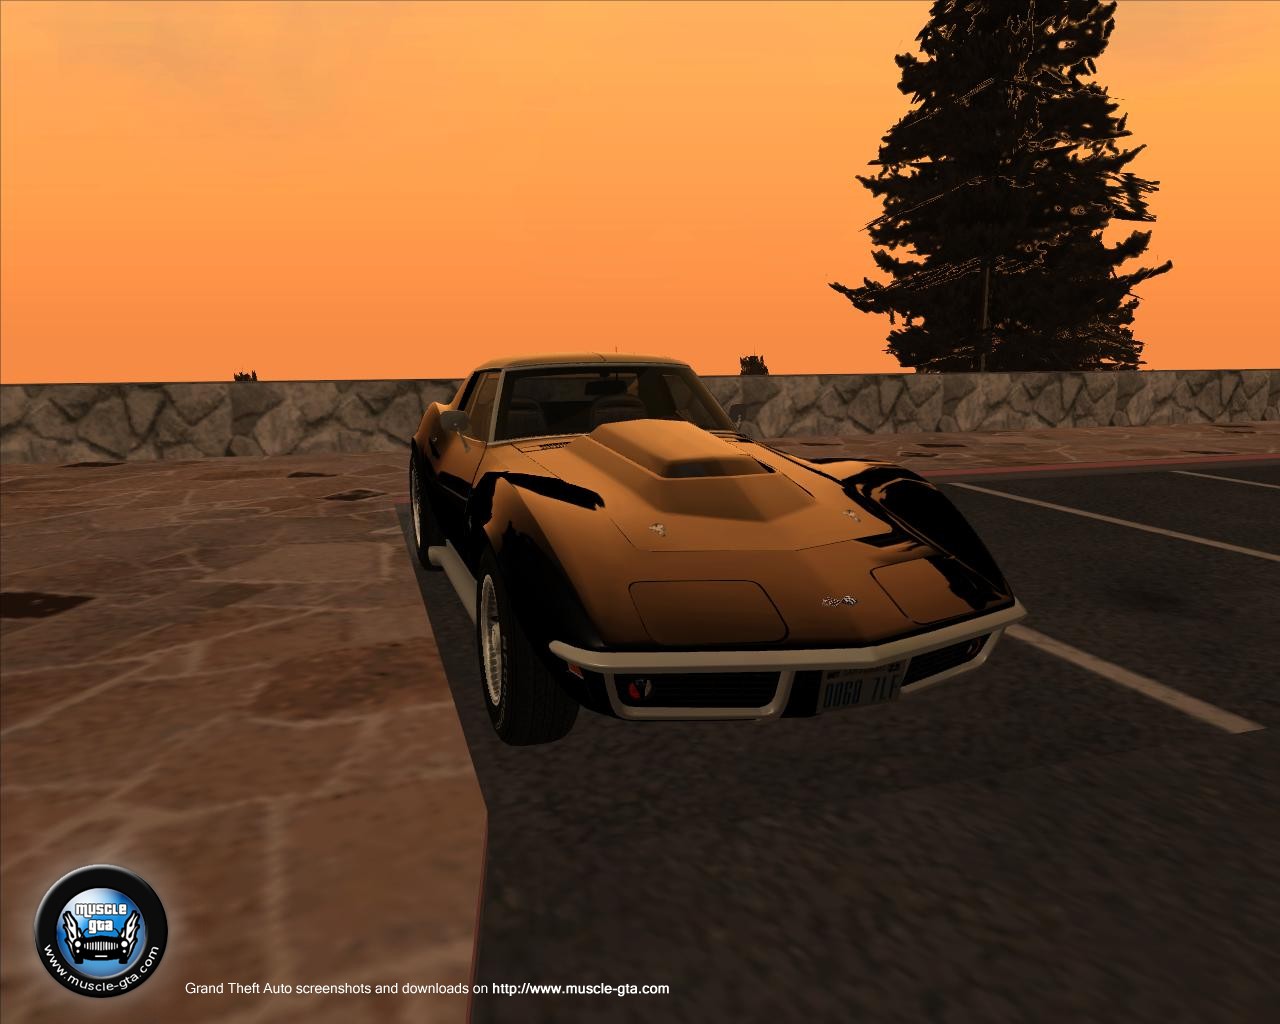 Screenshot of Chevrolet Corvette Stingray 1969 mod for GTA San Andreas